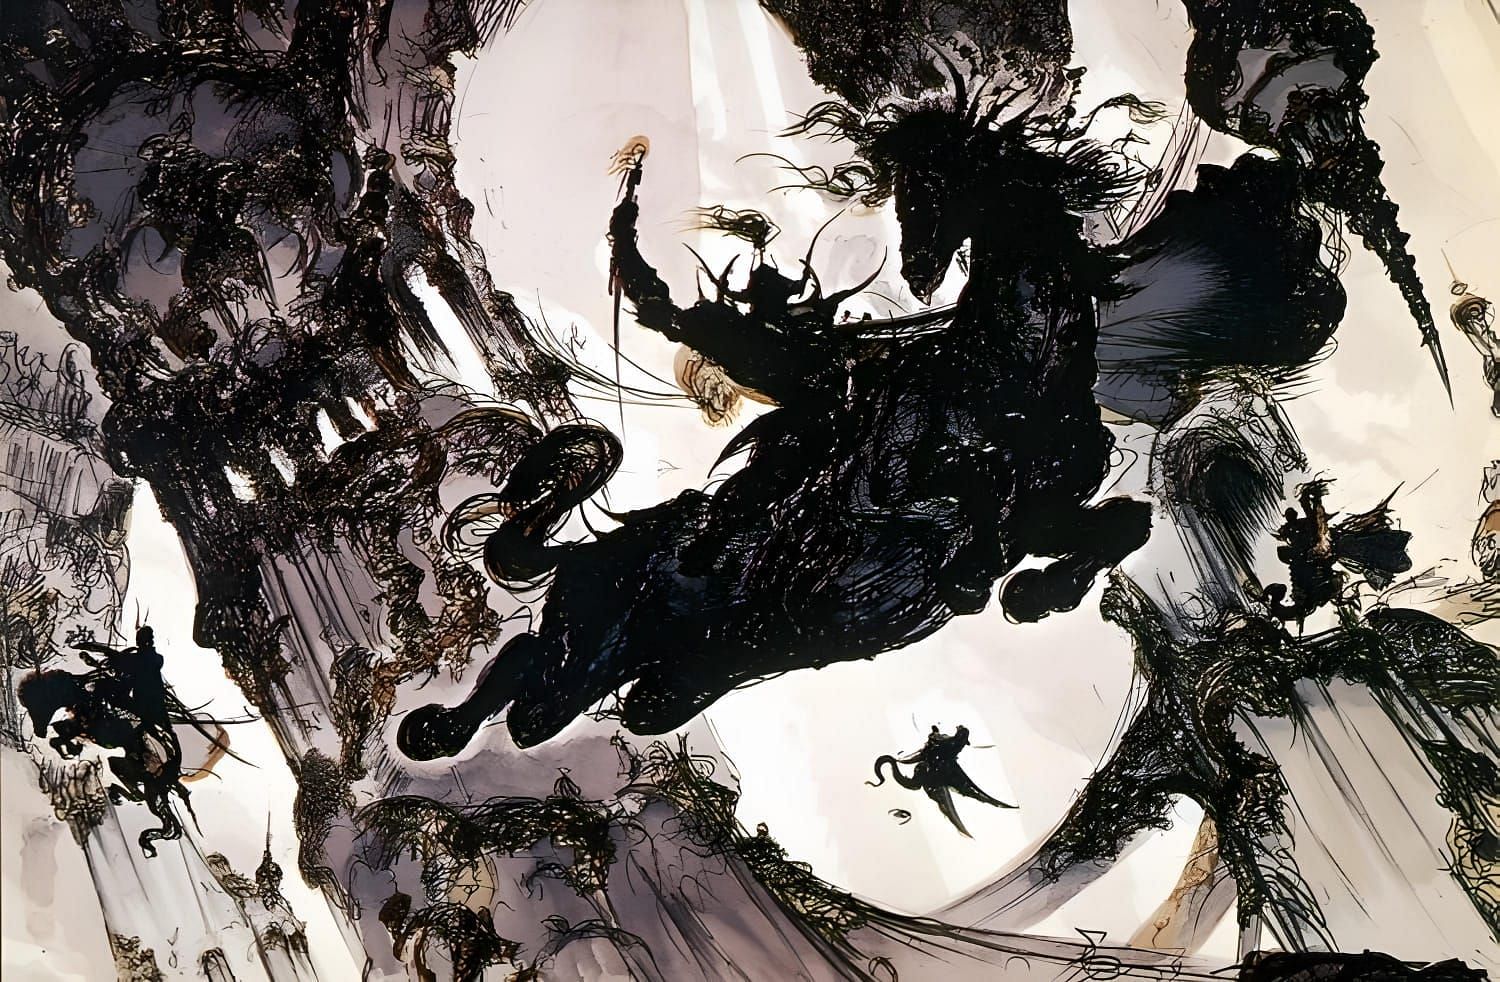 Final Fantasy illustrations by Amano (Image via yoshitakaamano.com)